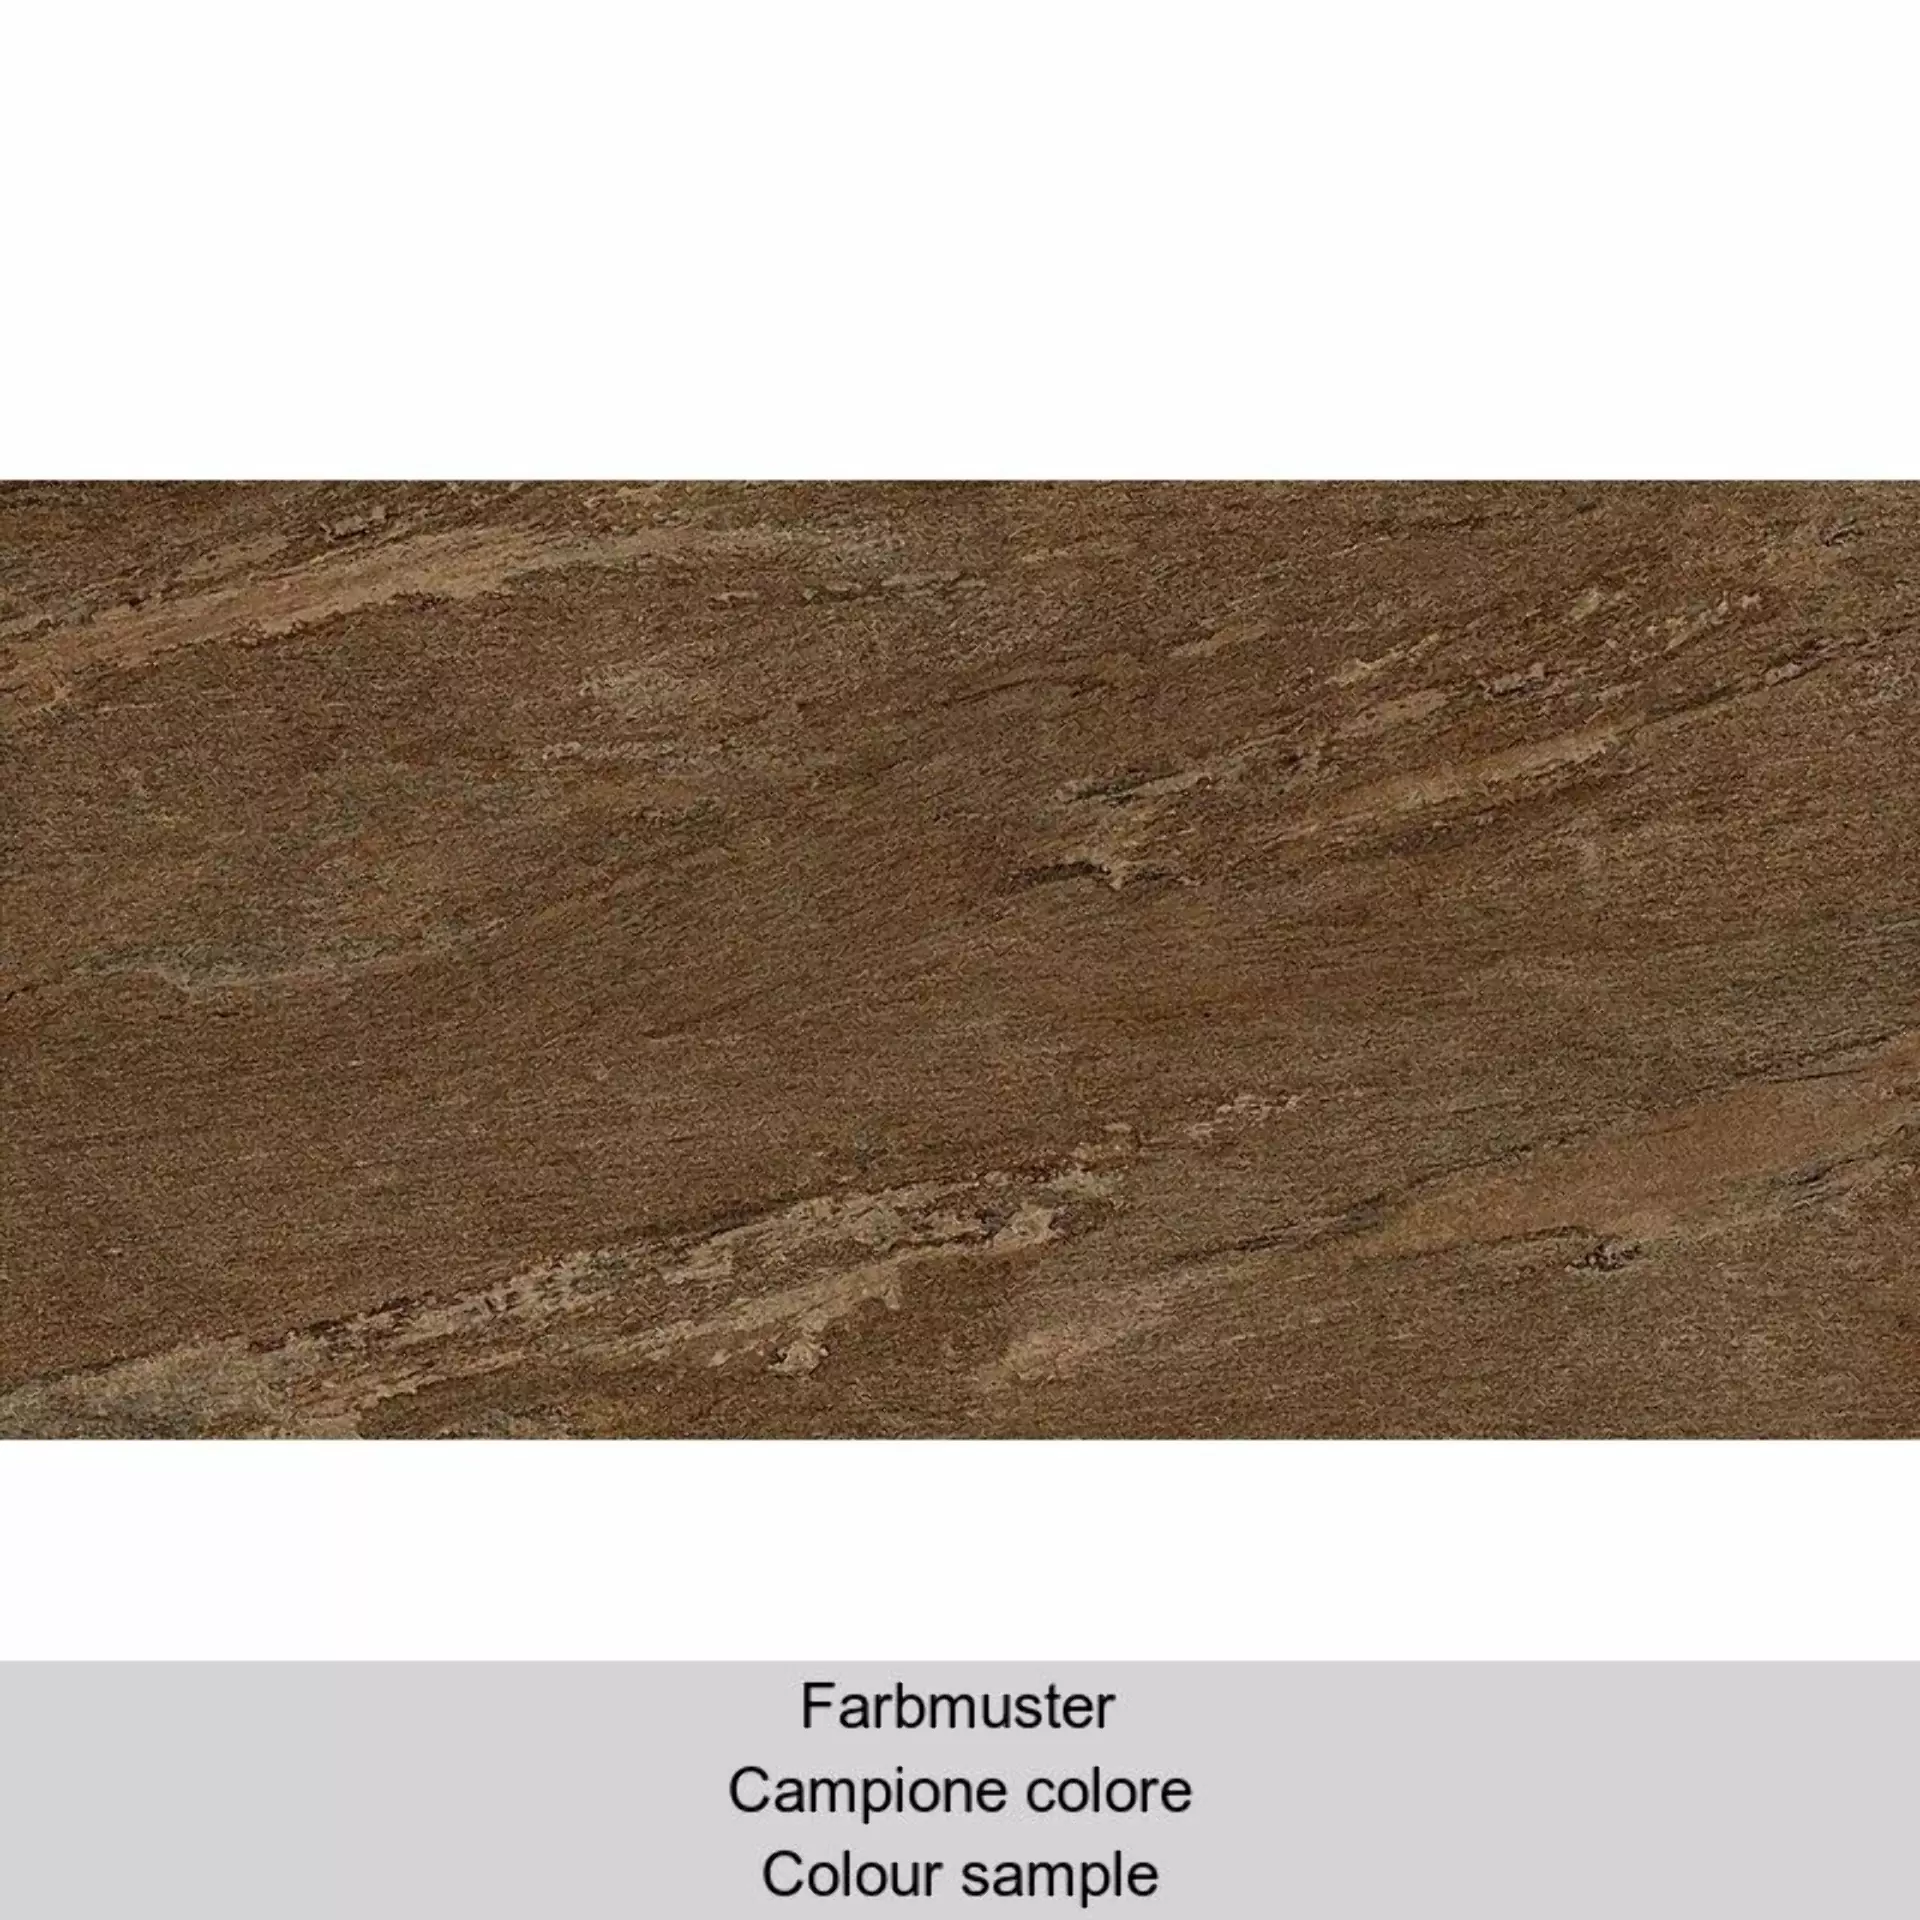 Century Stonerock Rust Stone Two – Grip 0119807 50x100cm rectified 20mm